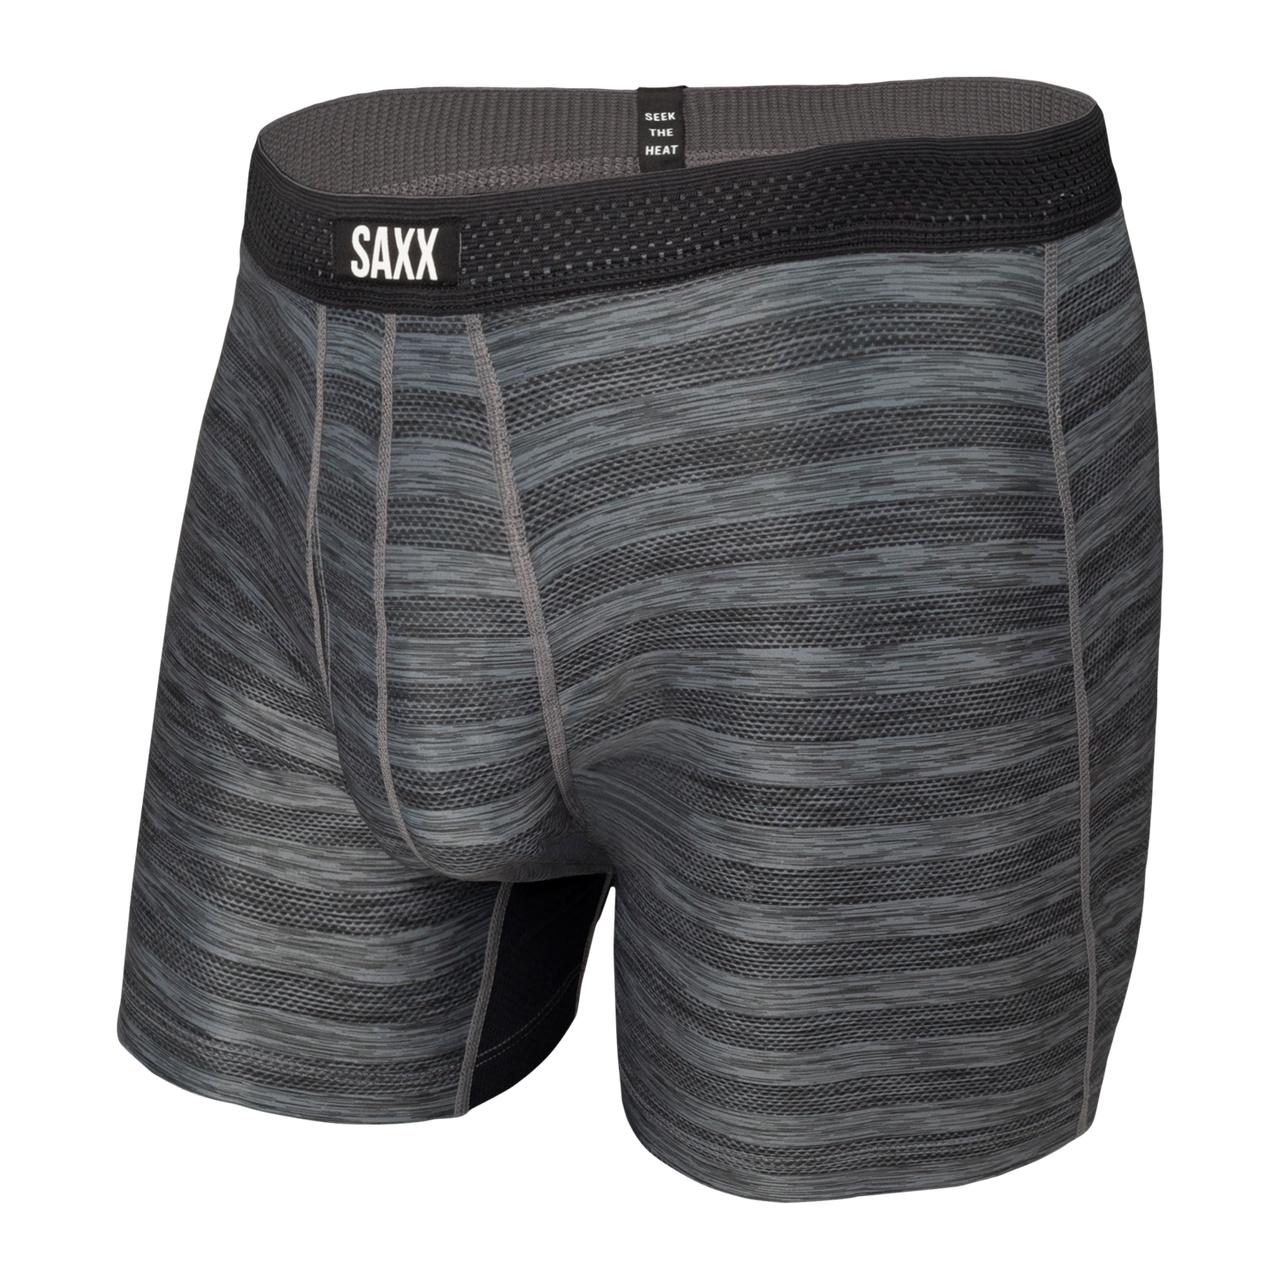 Saxx Men's DropTemp Cooling Mesh Boxer Briefs